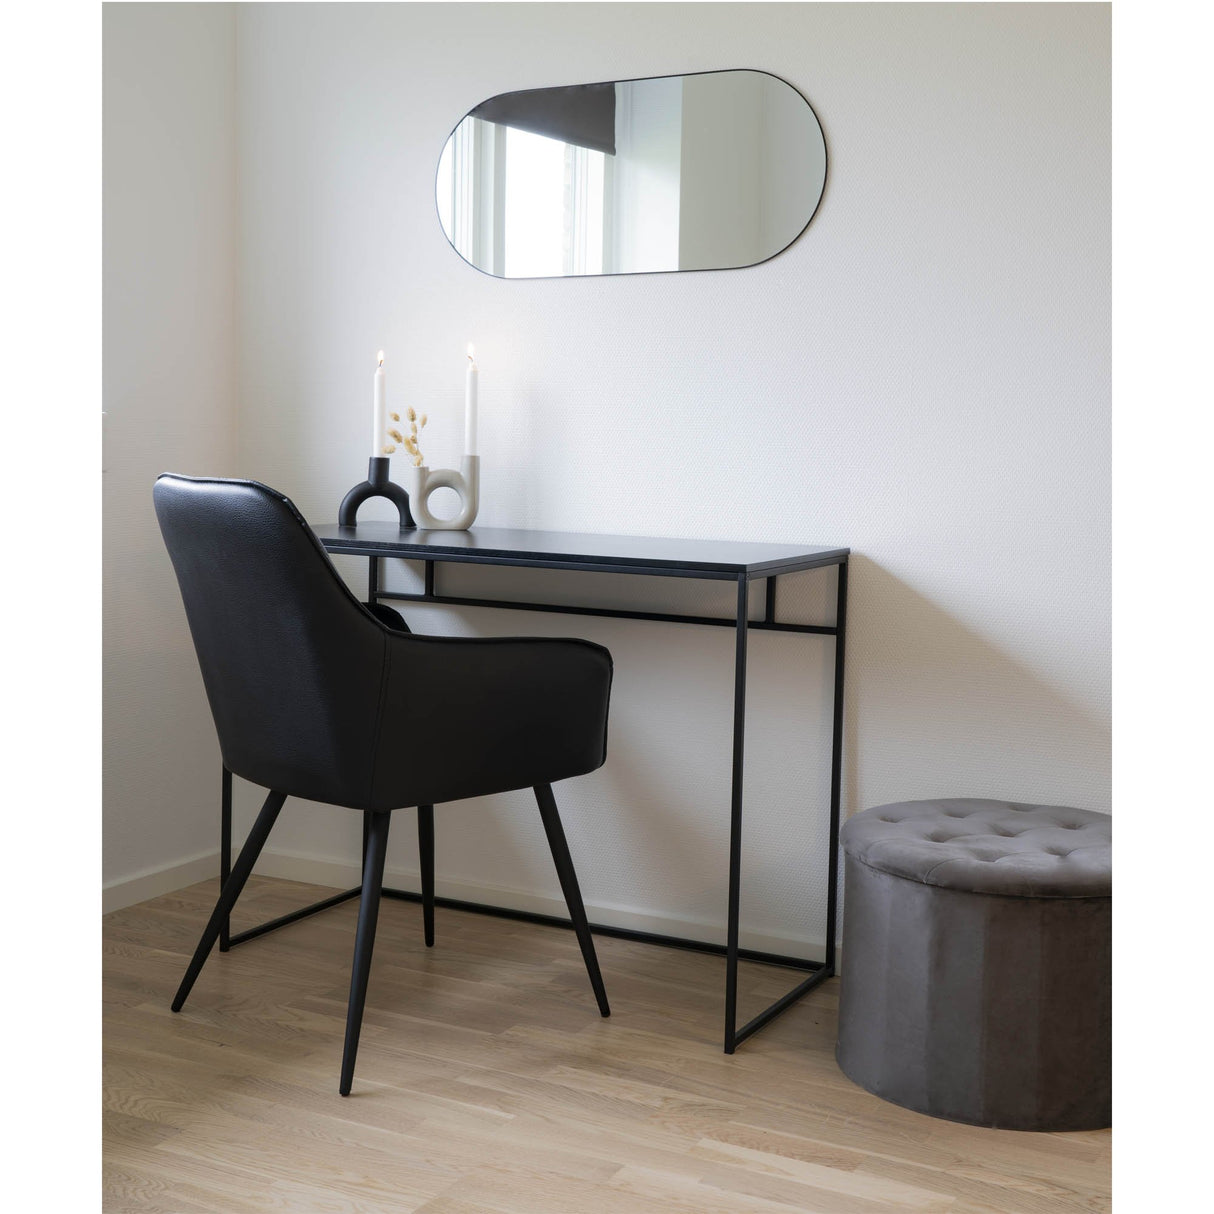 Oglinda ovala Jersey Mirror 35x80 cm House Nordic